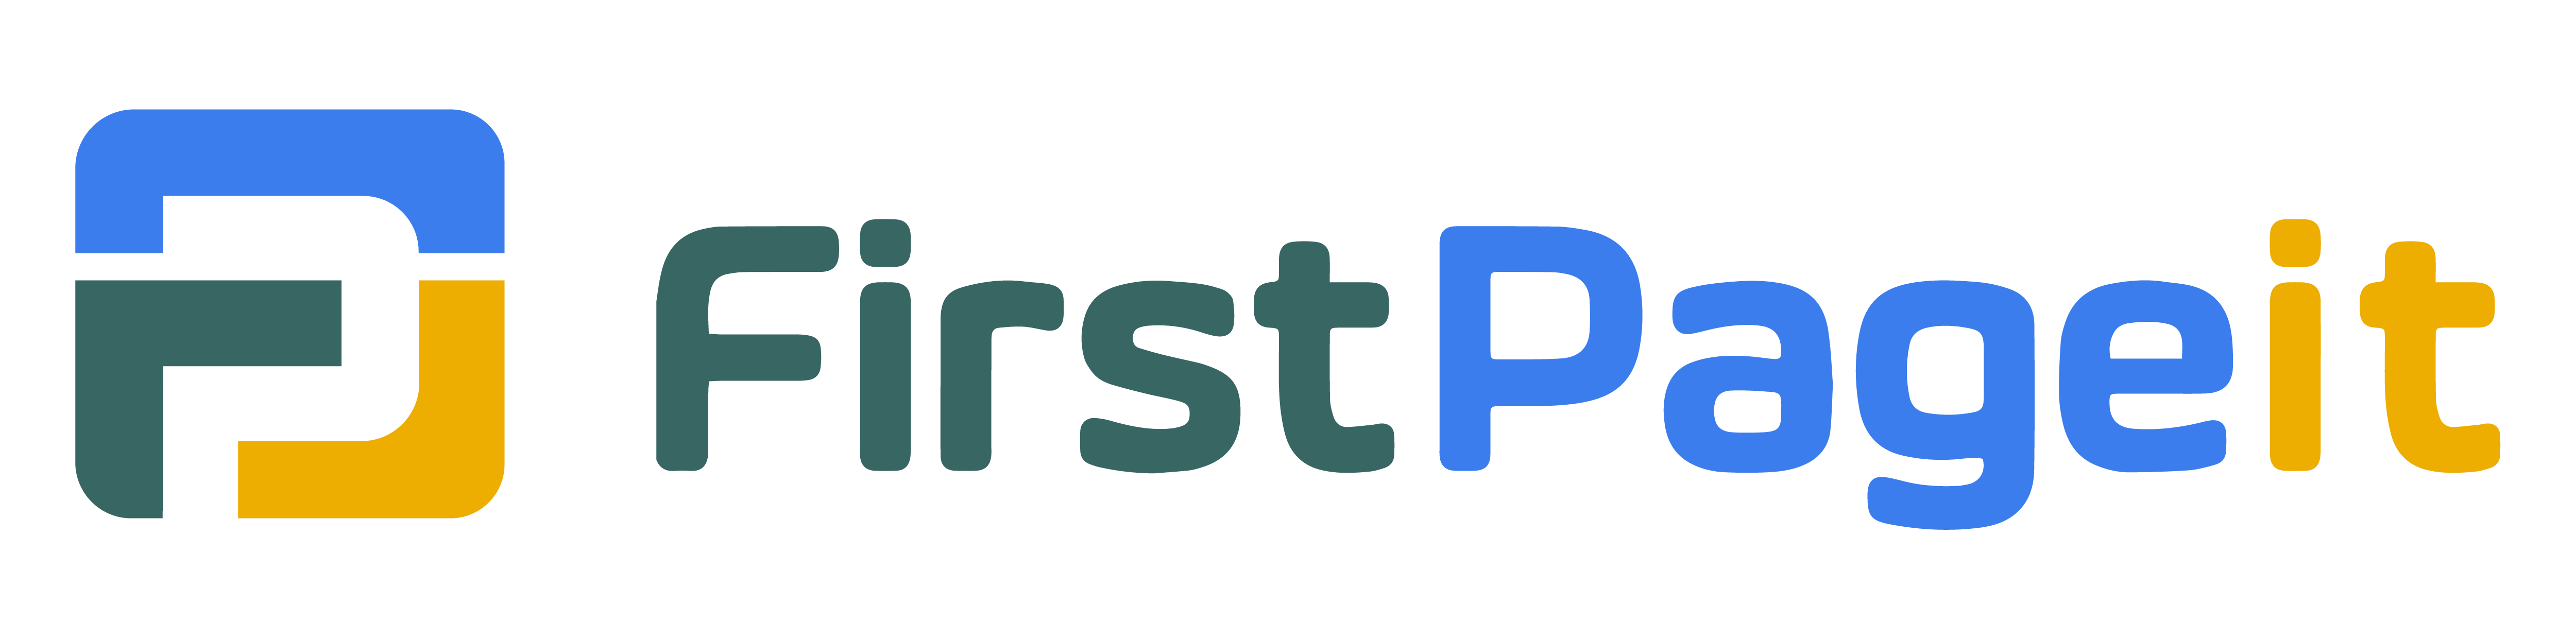 firstpage logo